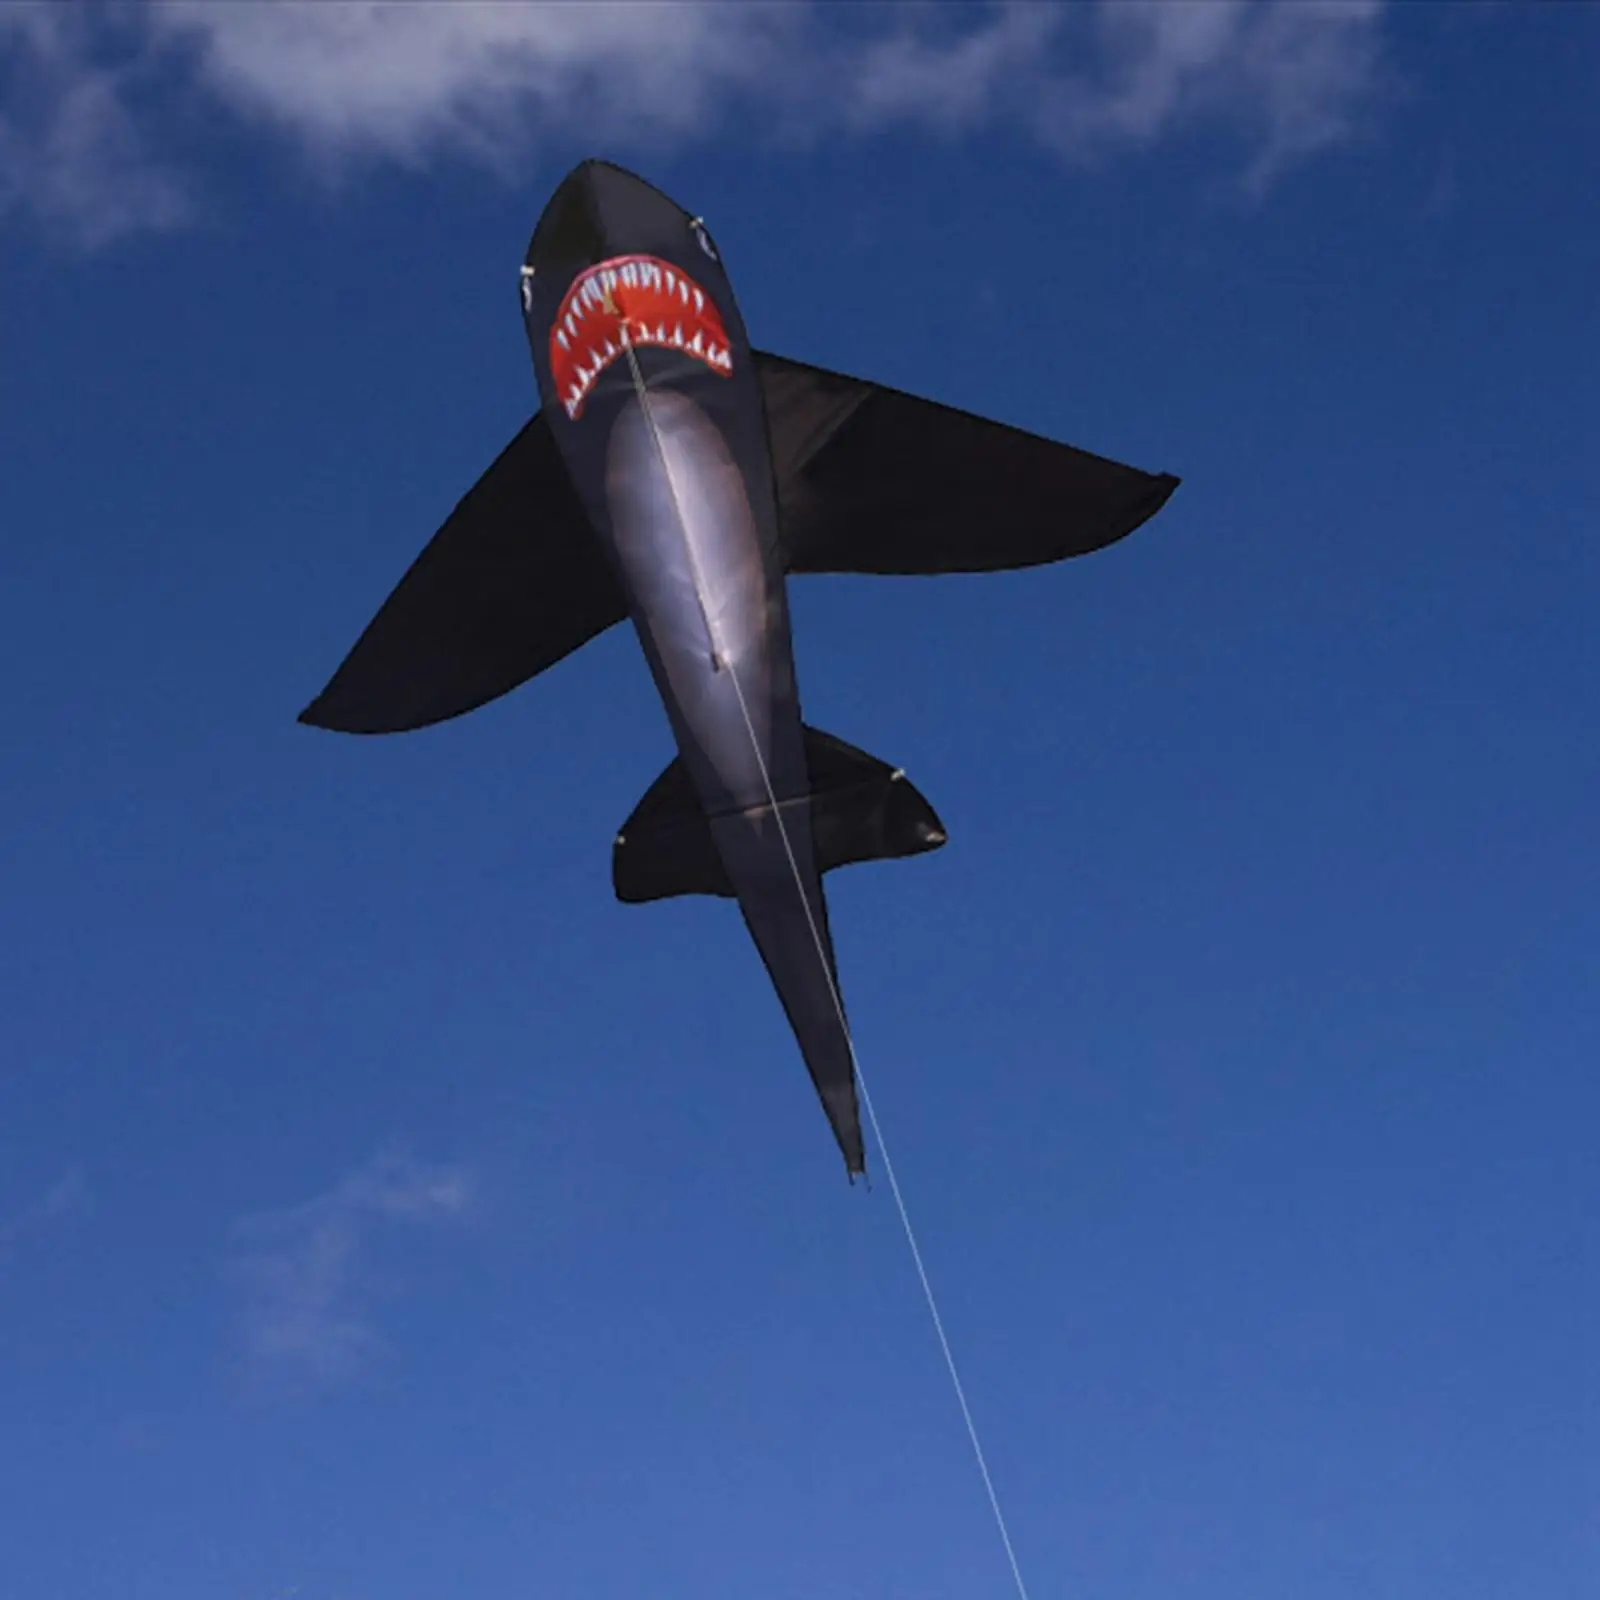 NEW Large Black Shark Kite Stunt Sport Beach Outdoor Fun Toy Kite w/ a Wire Loop 